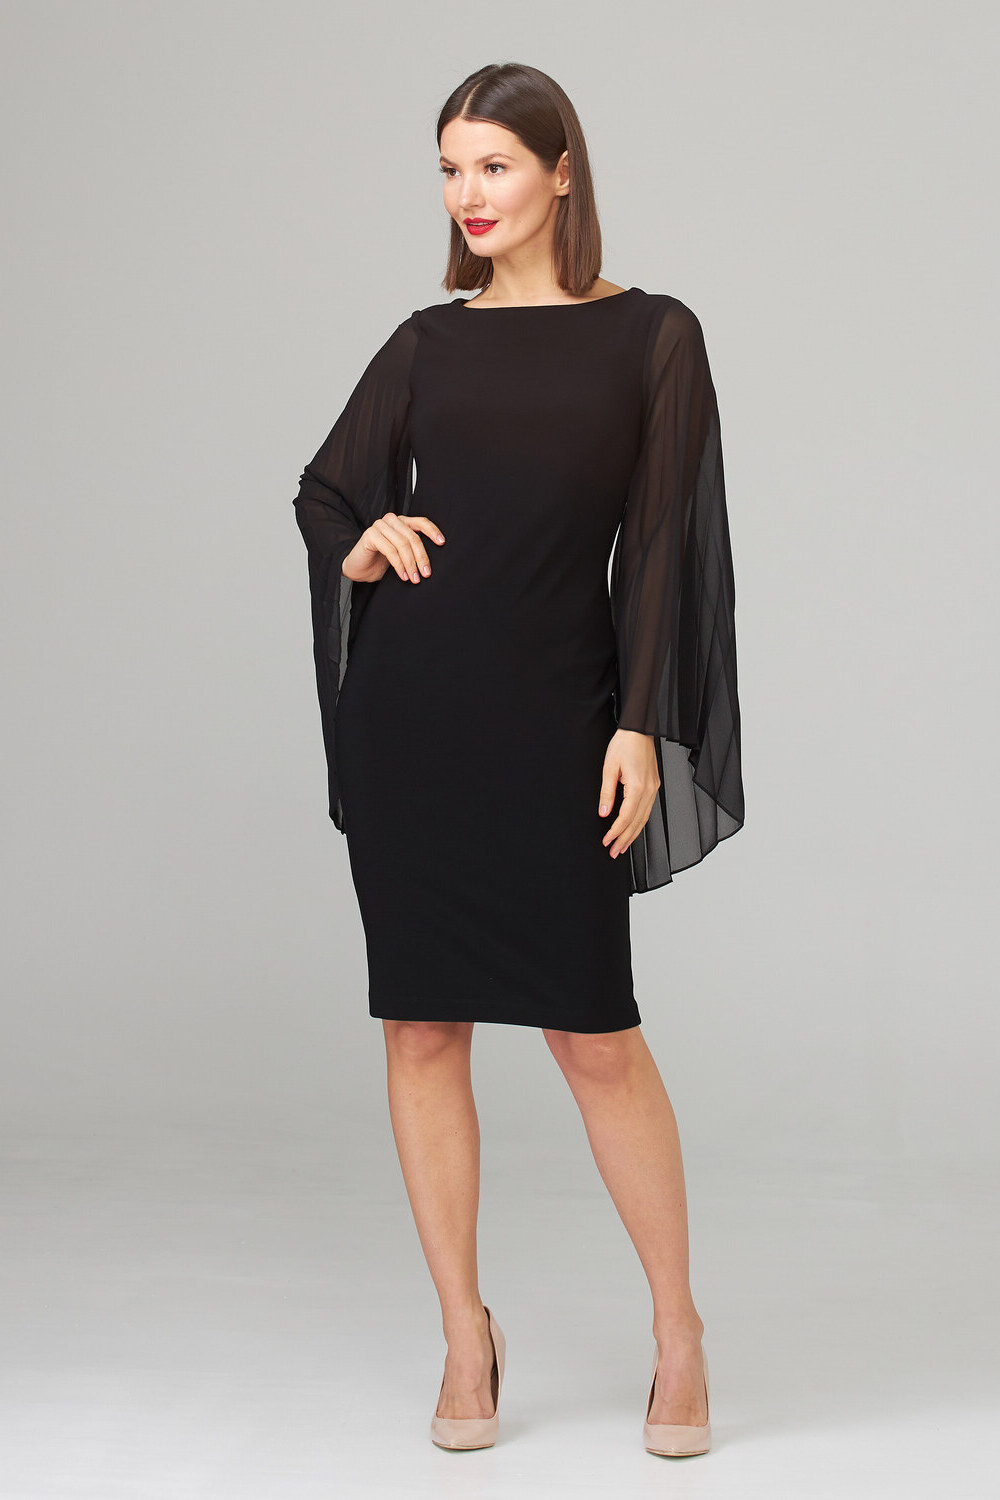 Joseph Ribkoff Dress Style 201417. Black